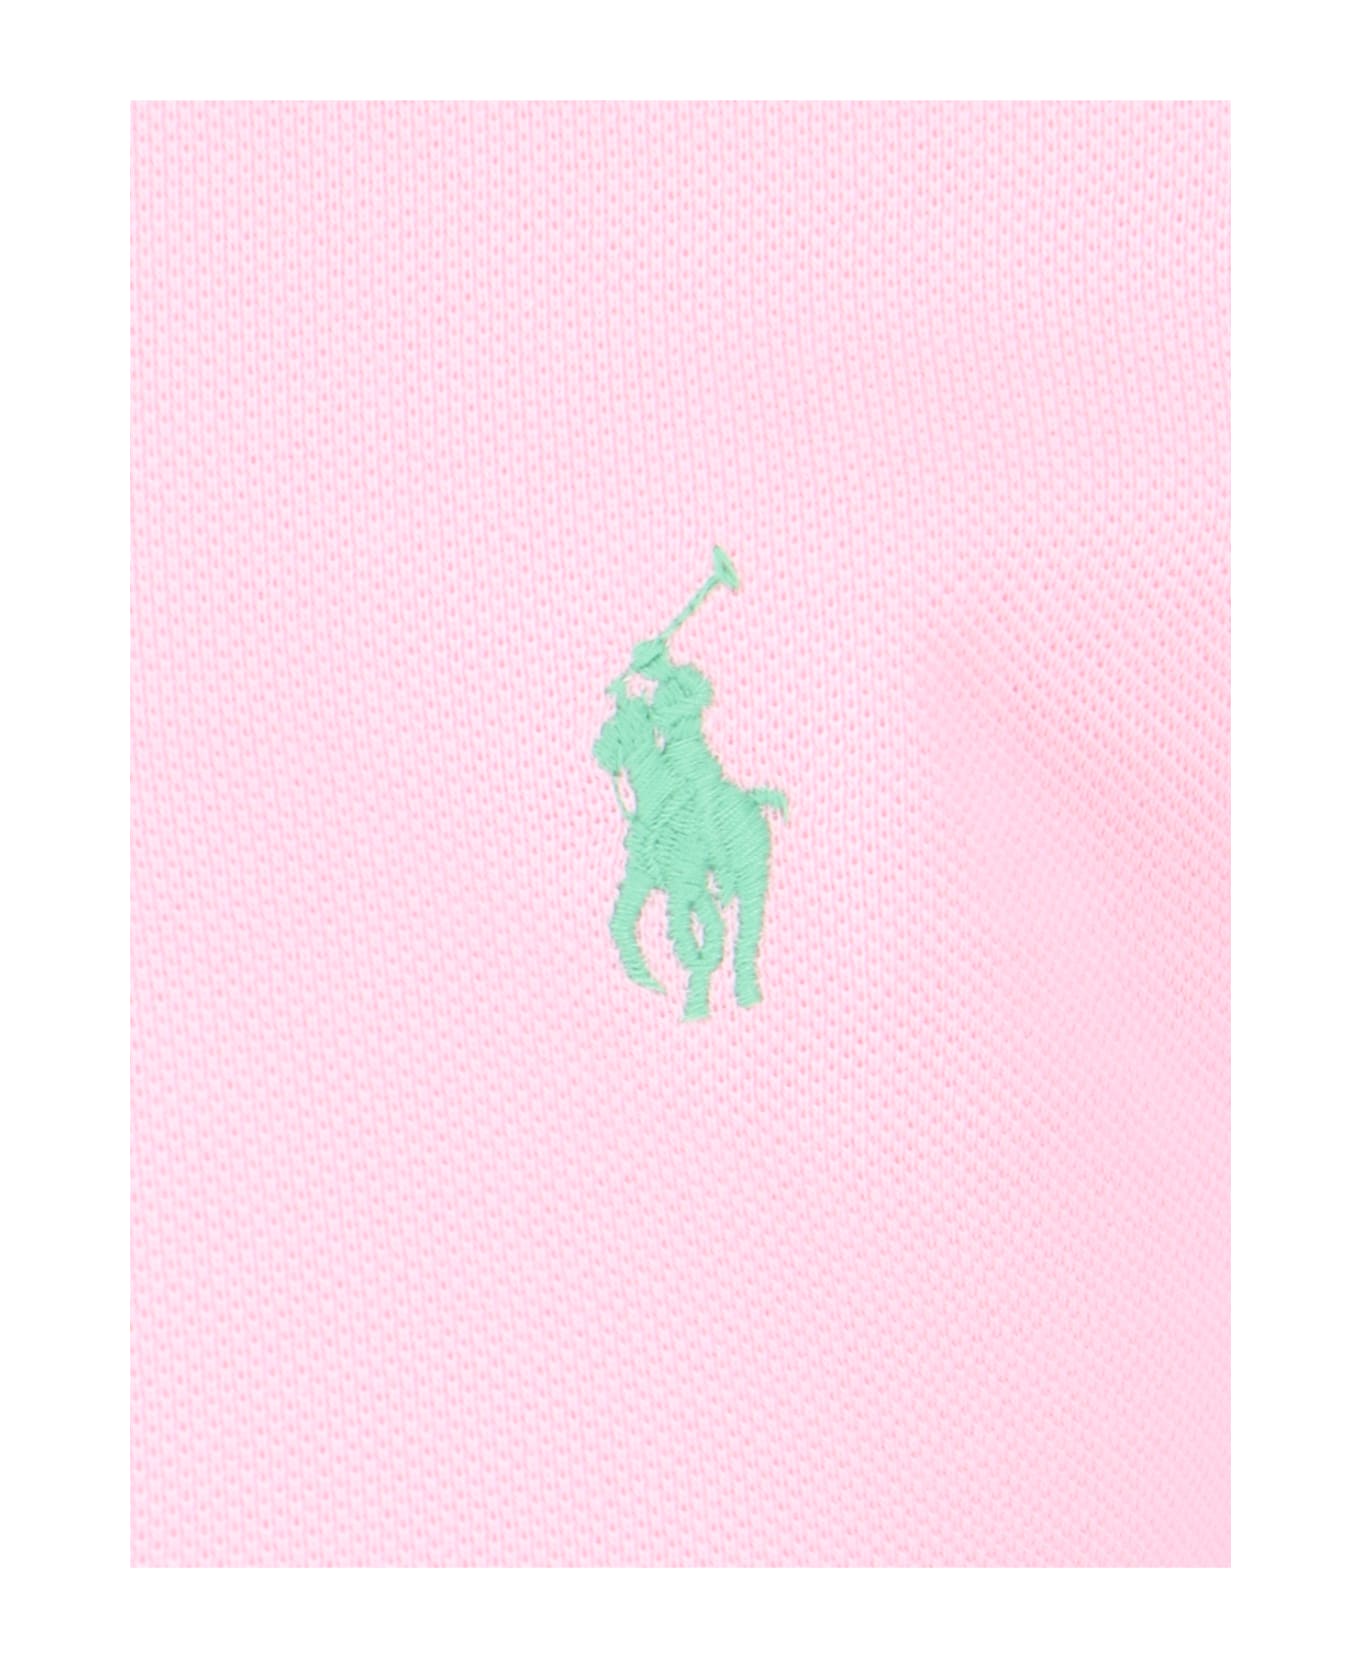 Polo Ralph Lauren Logo Polo Shirt - Pink